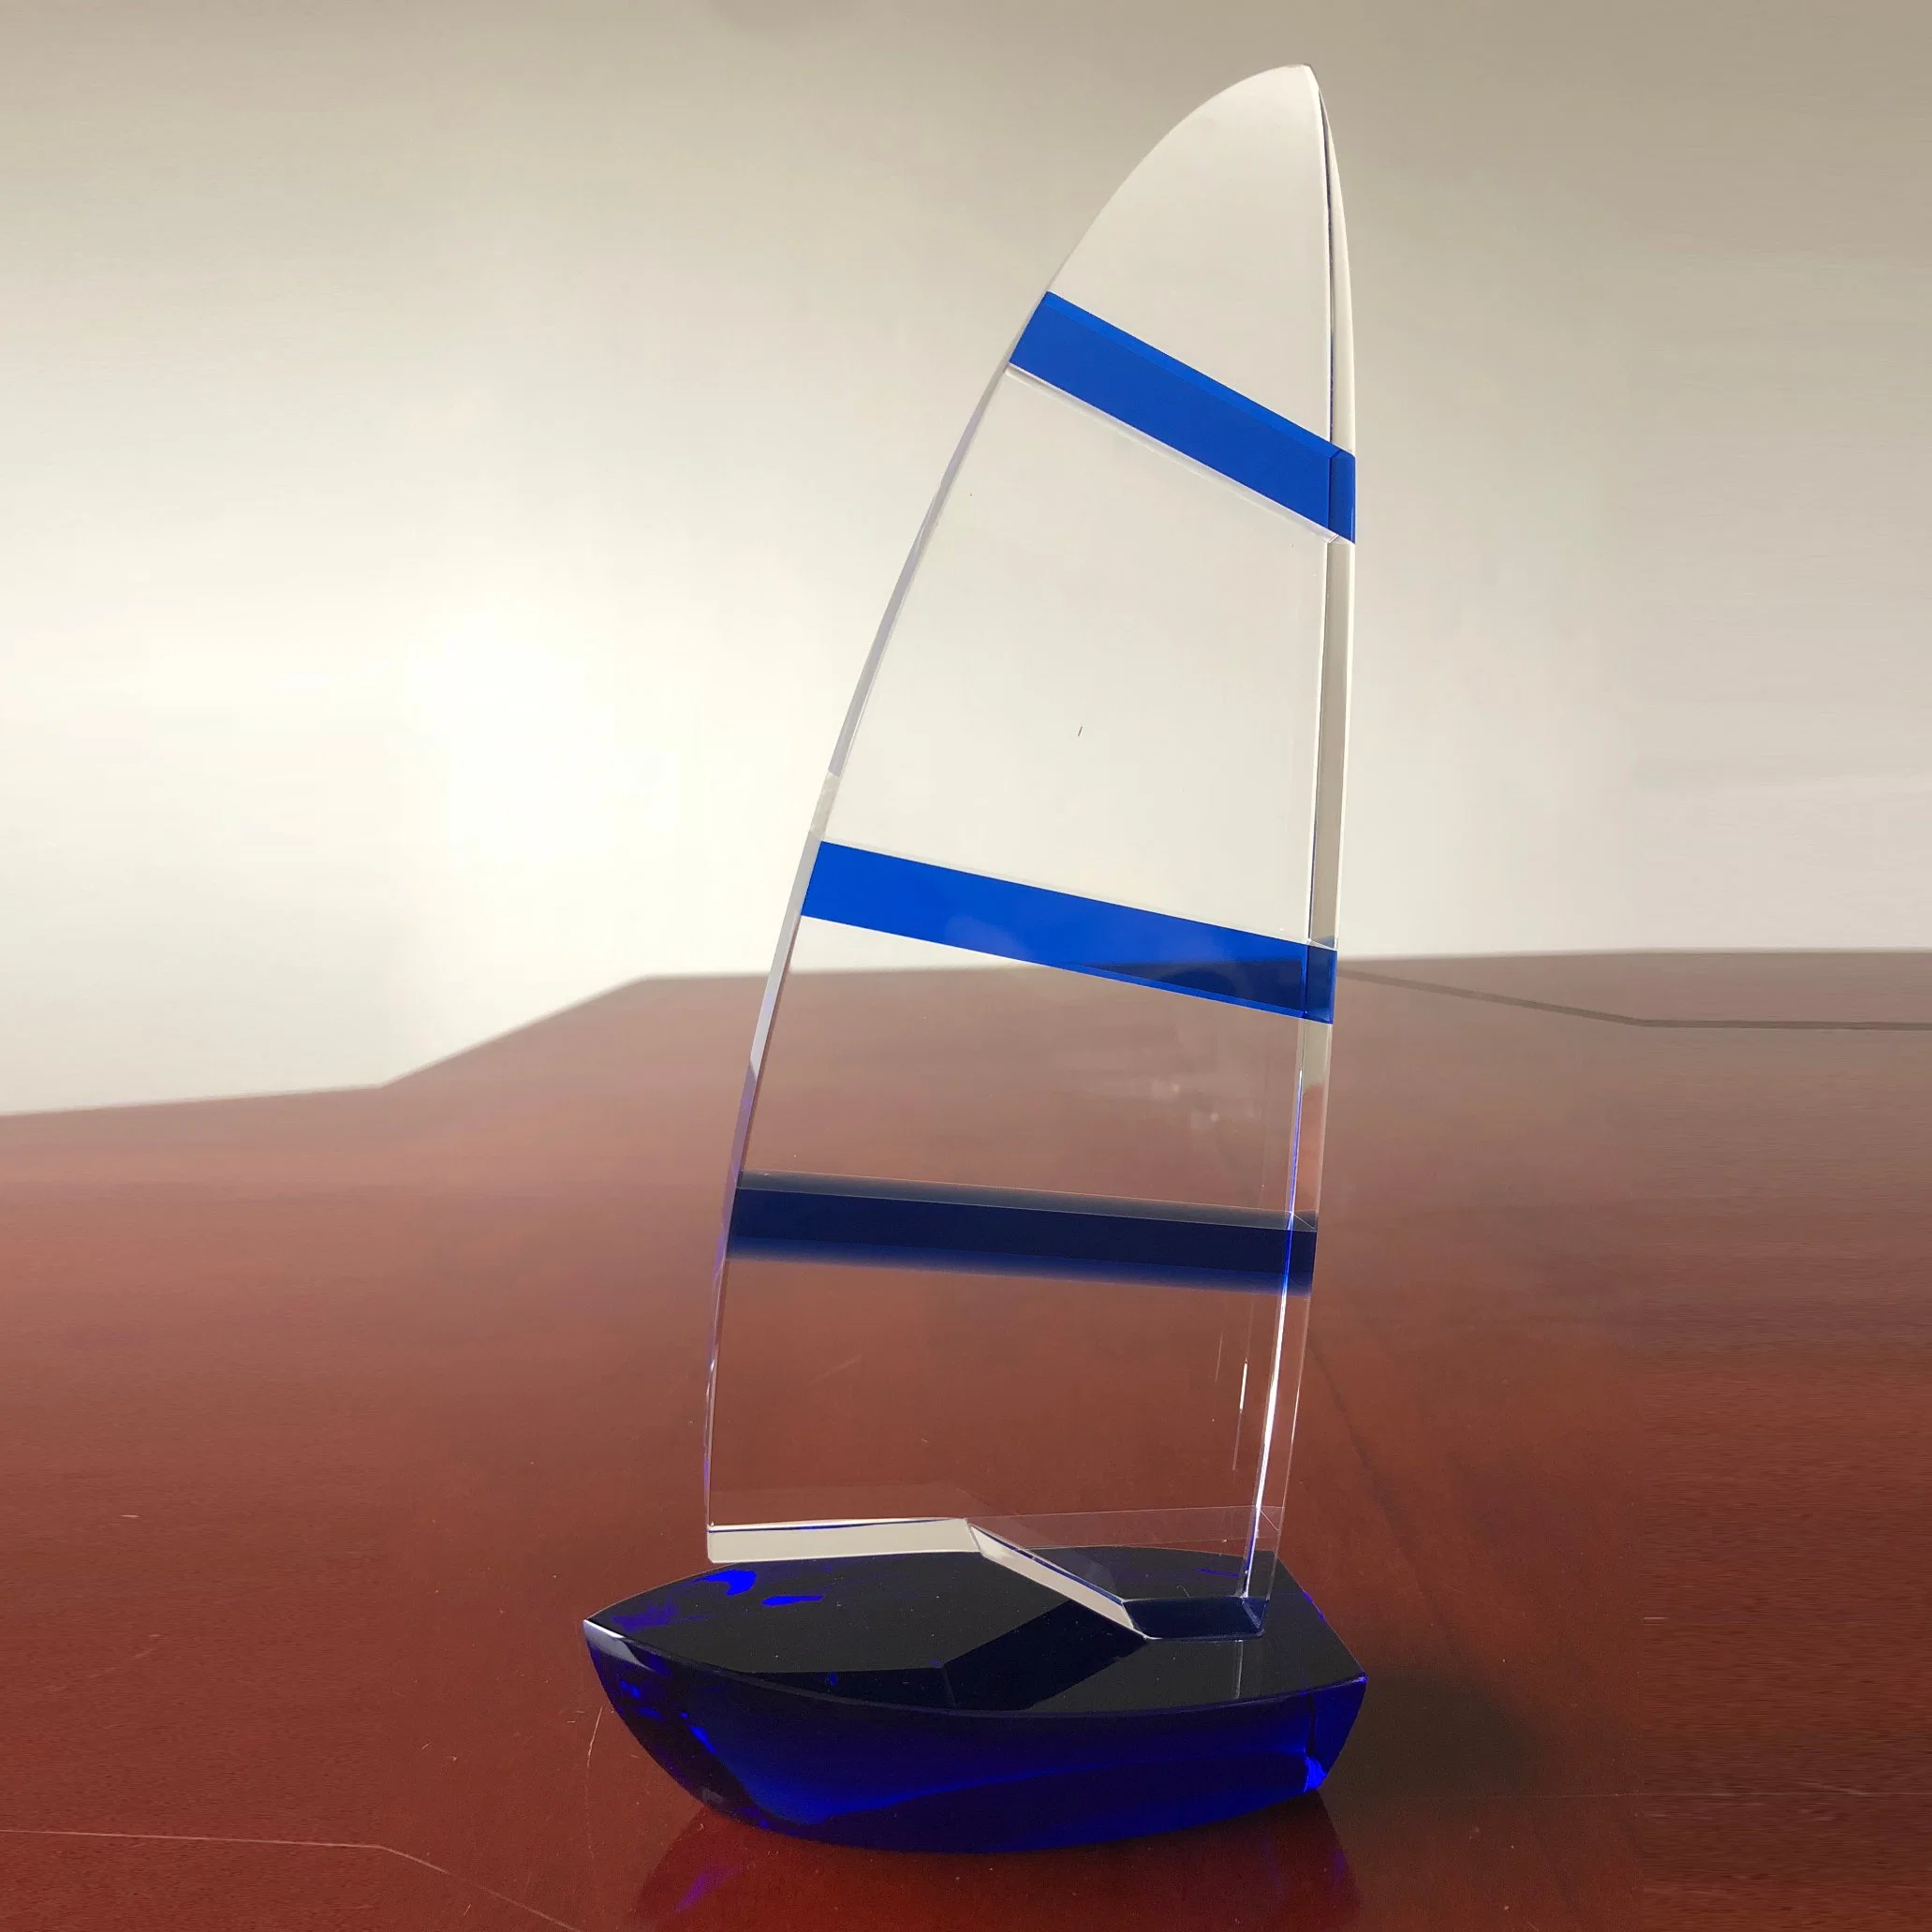 Jadecrystal Glass Book Awards Trophy